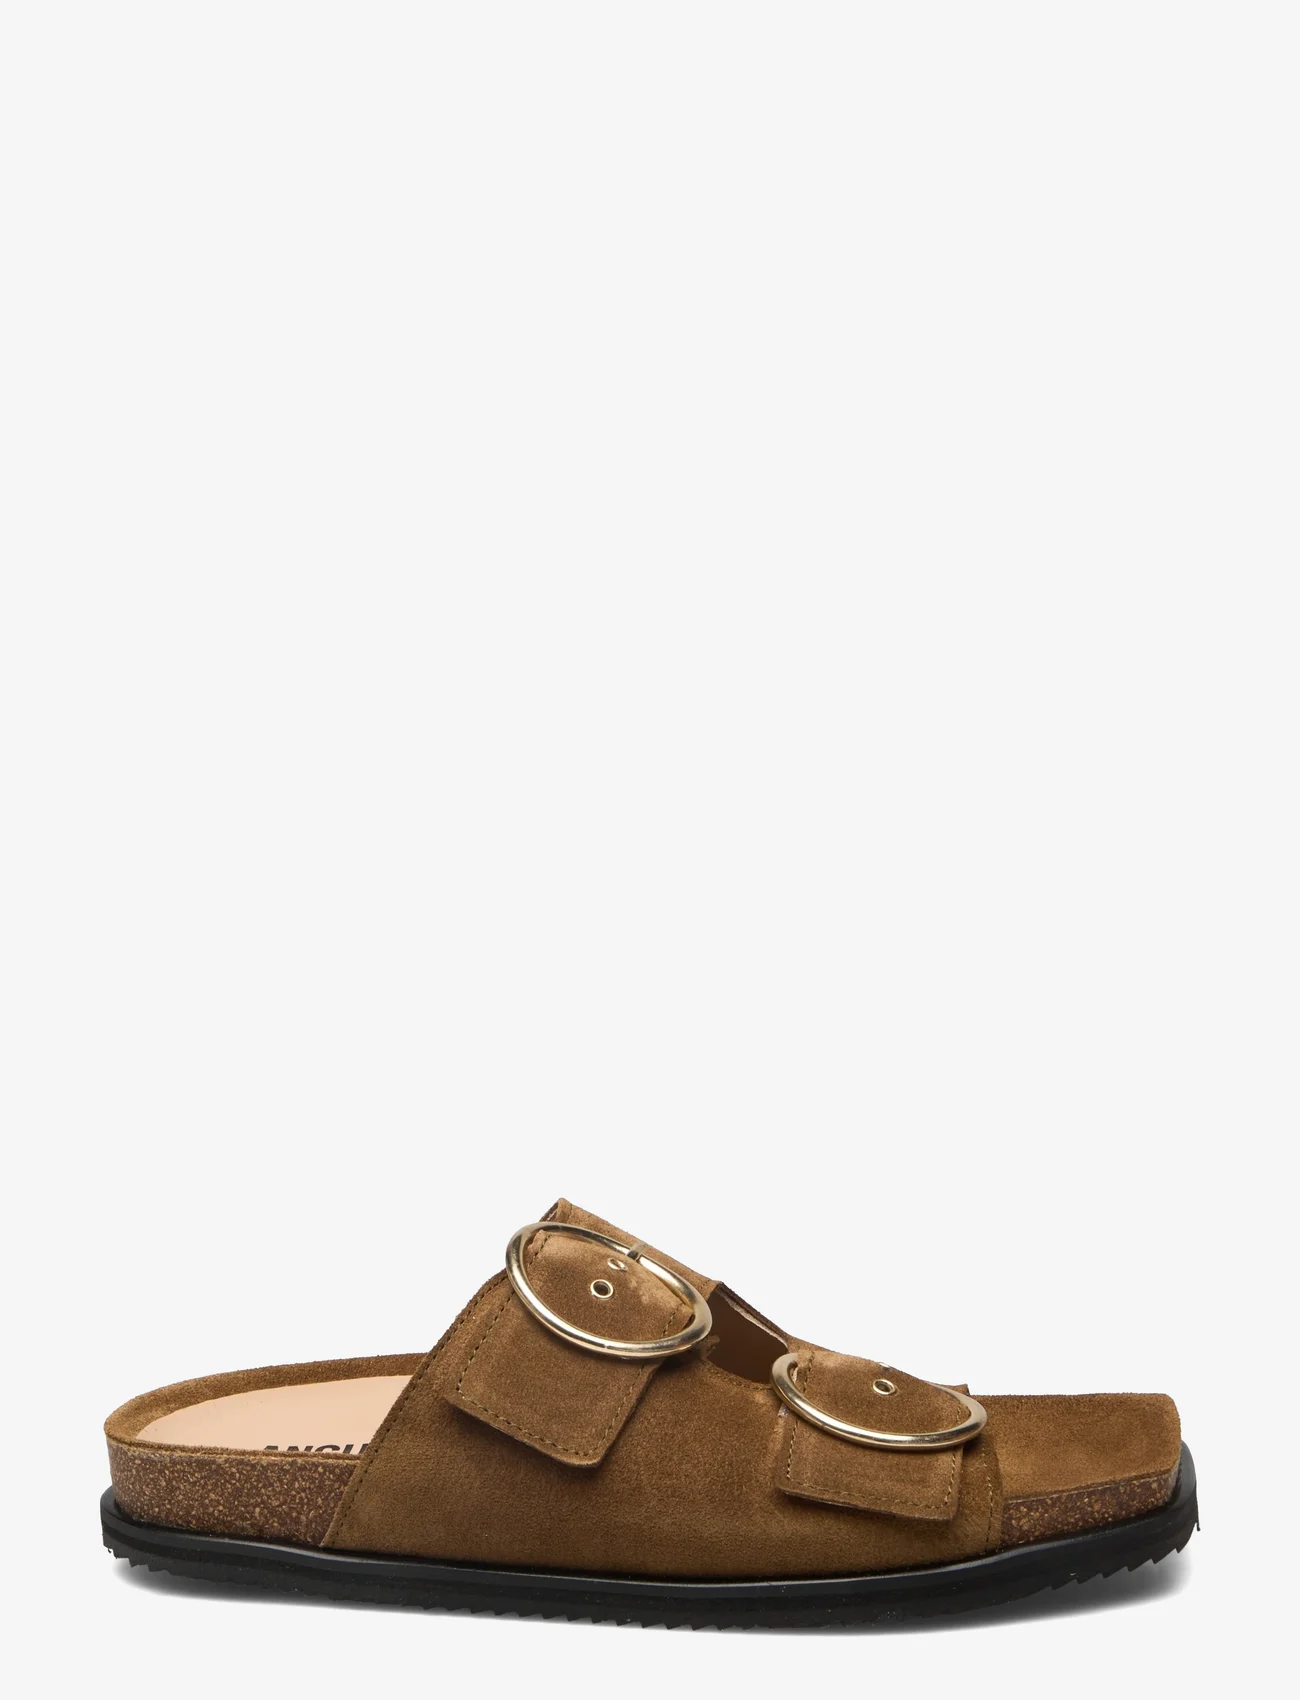 ANGULUS - Sandals - flat - open toe - op - platte sandalen - 2209 mustard - 1